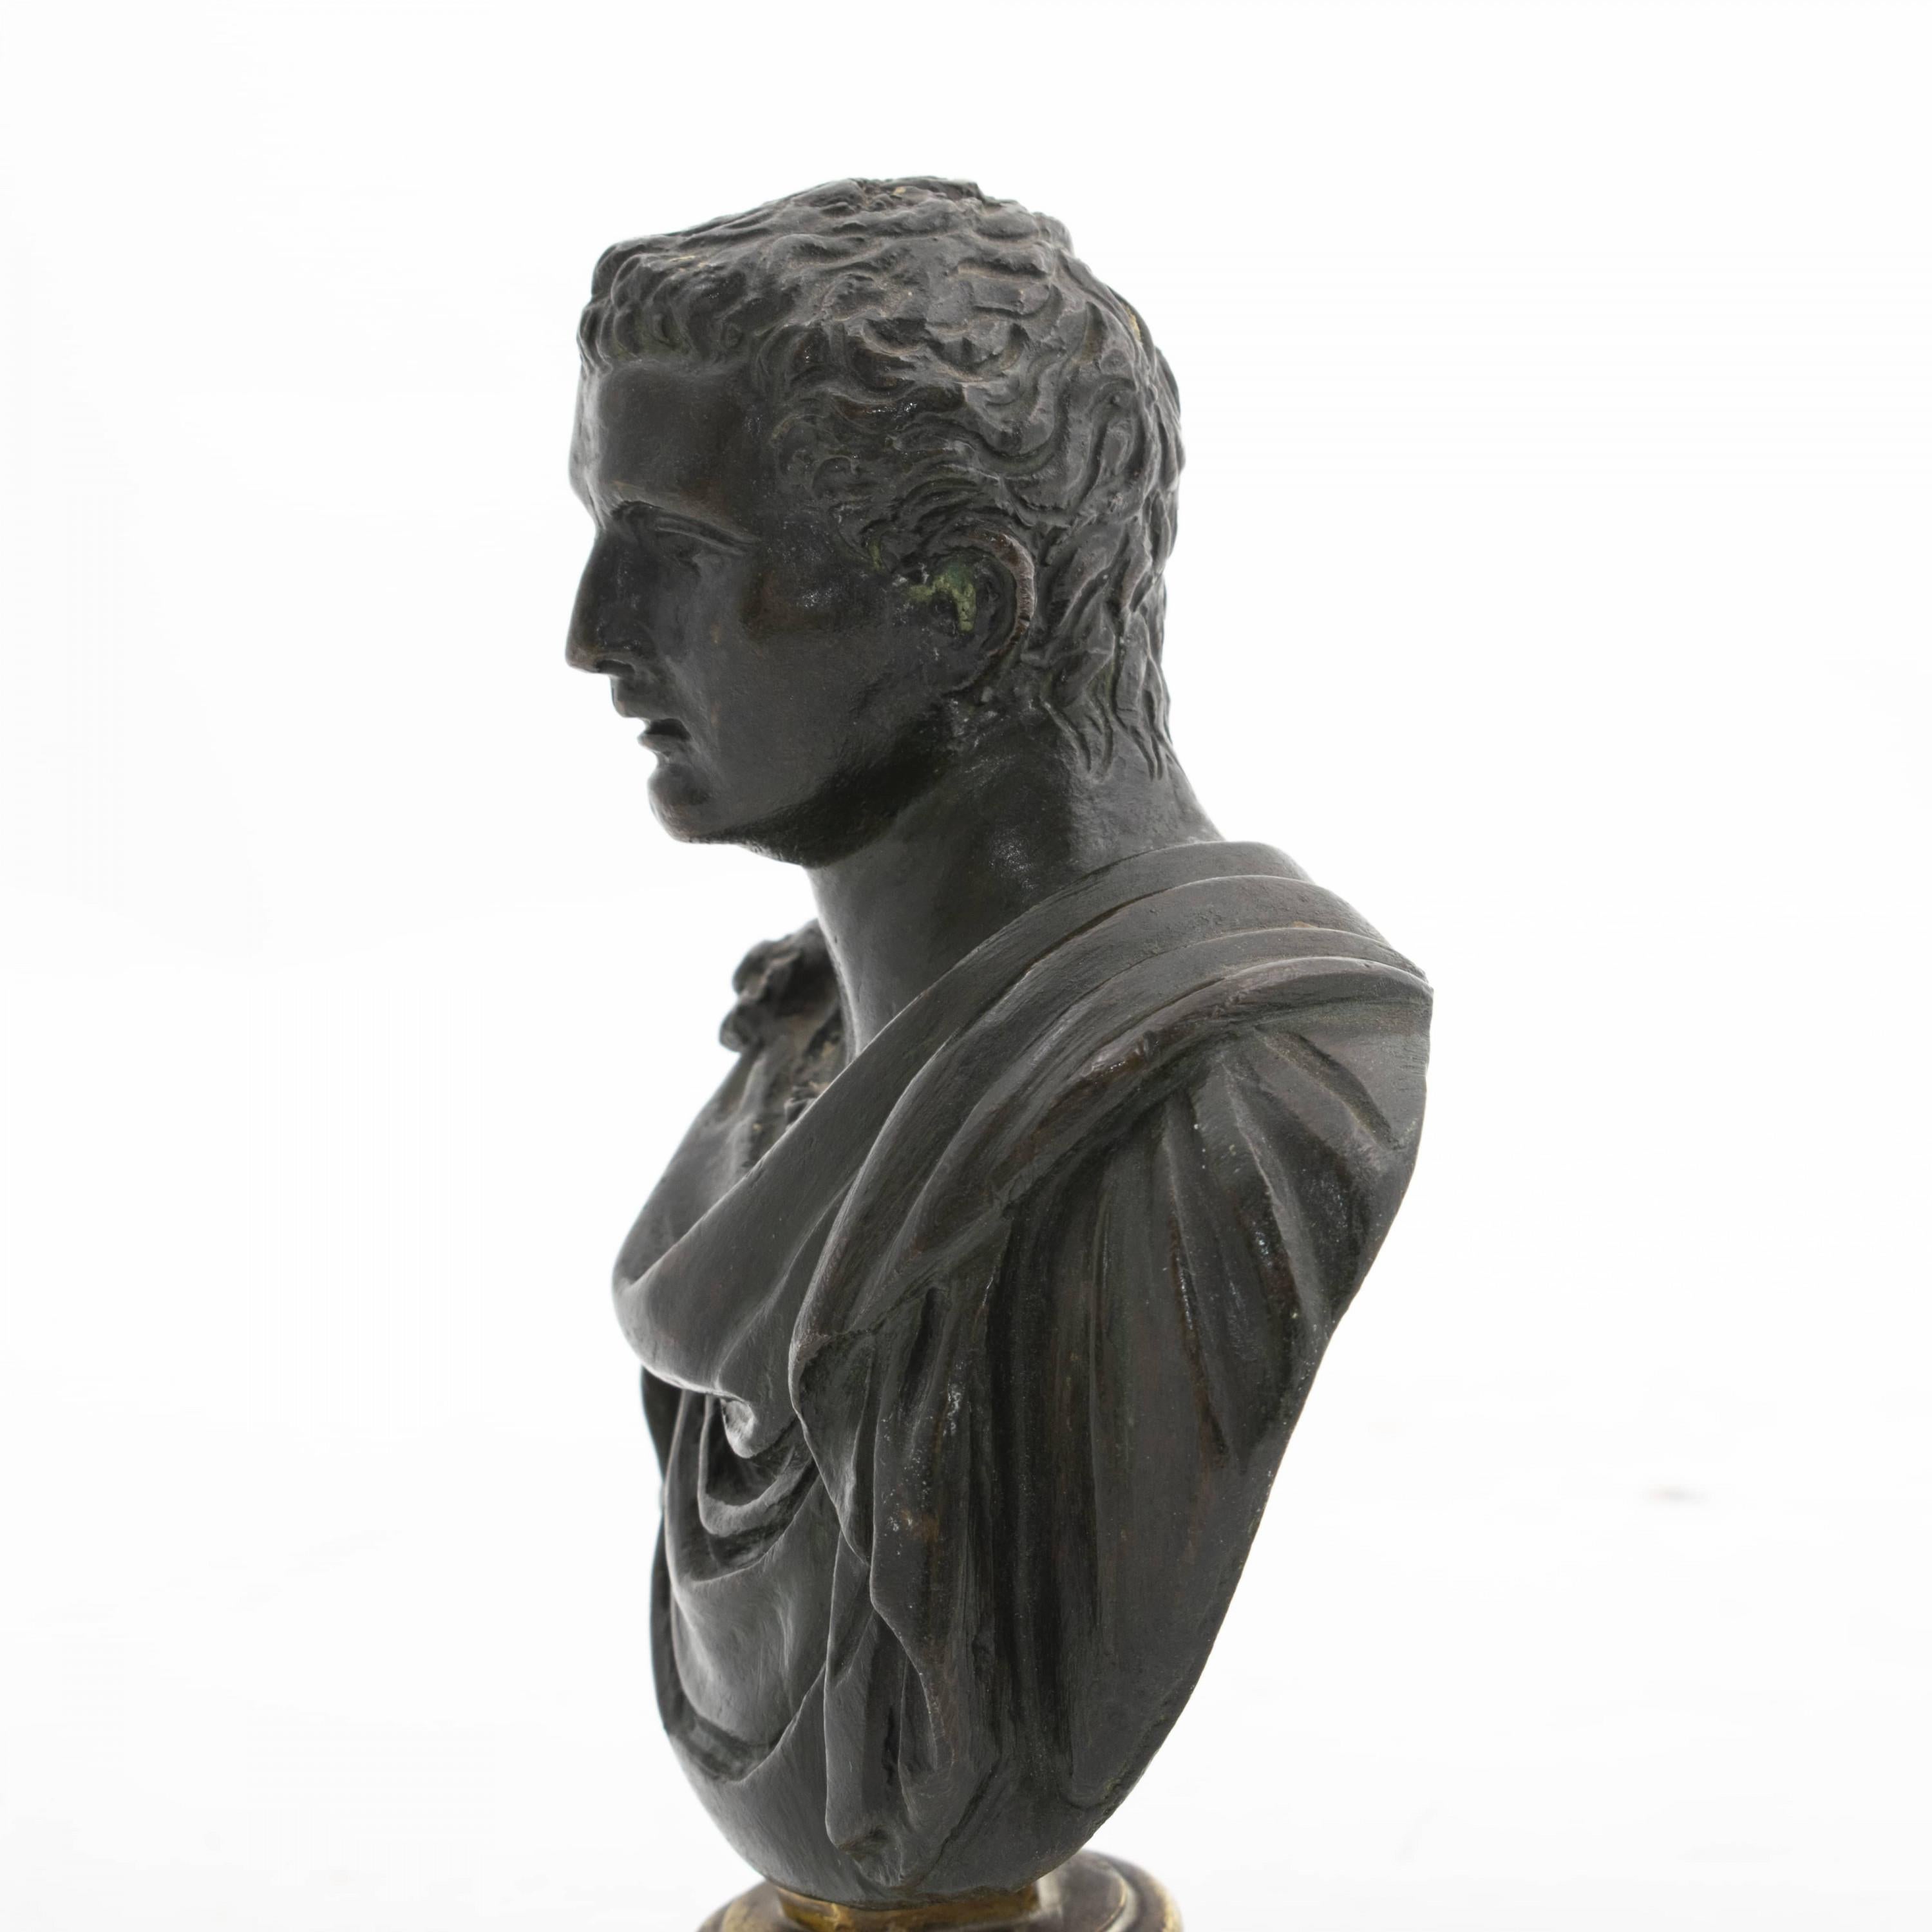 Antique Grand Tour, Small Bronze Sculpture of Roman Emperor 1